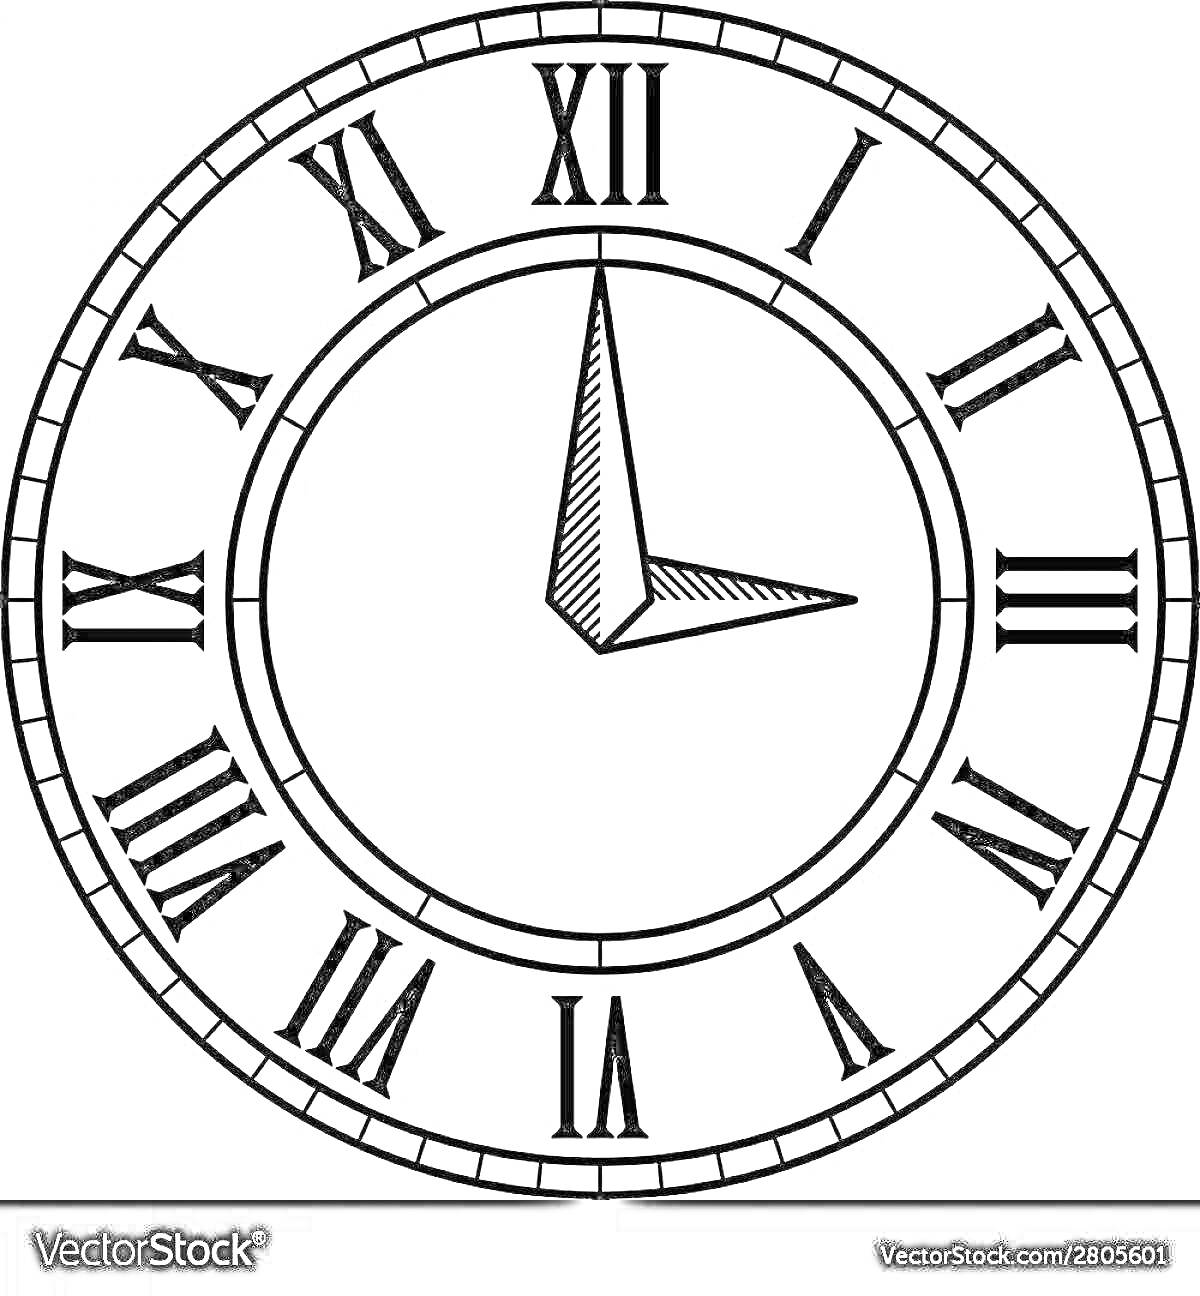 На раскраске изображено: Часы, Циферблат, Стрелки, Римские цифры